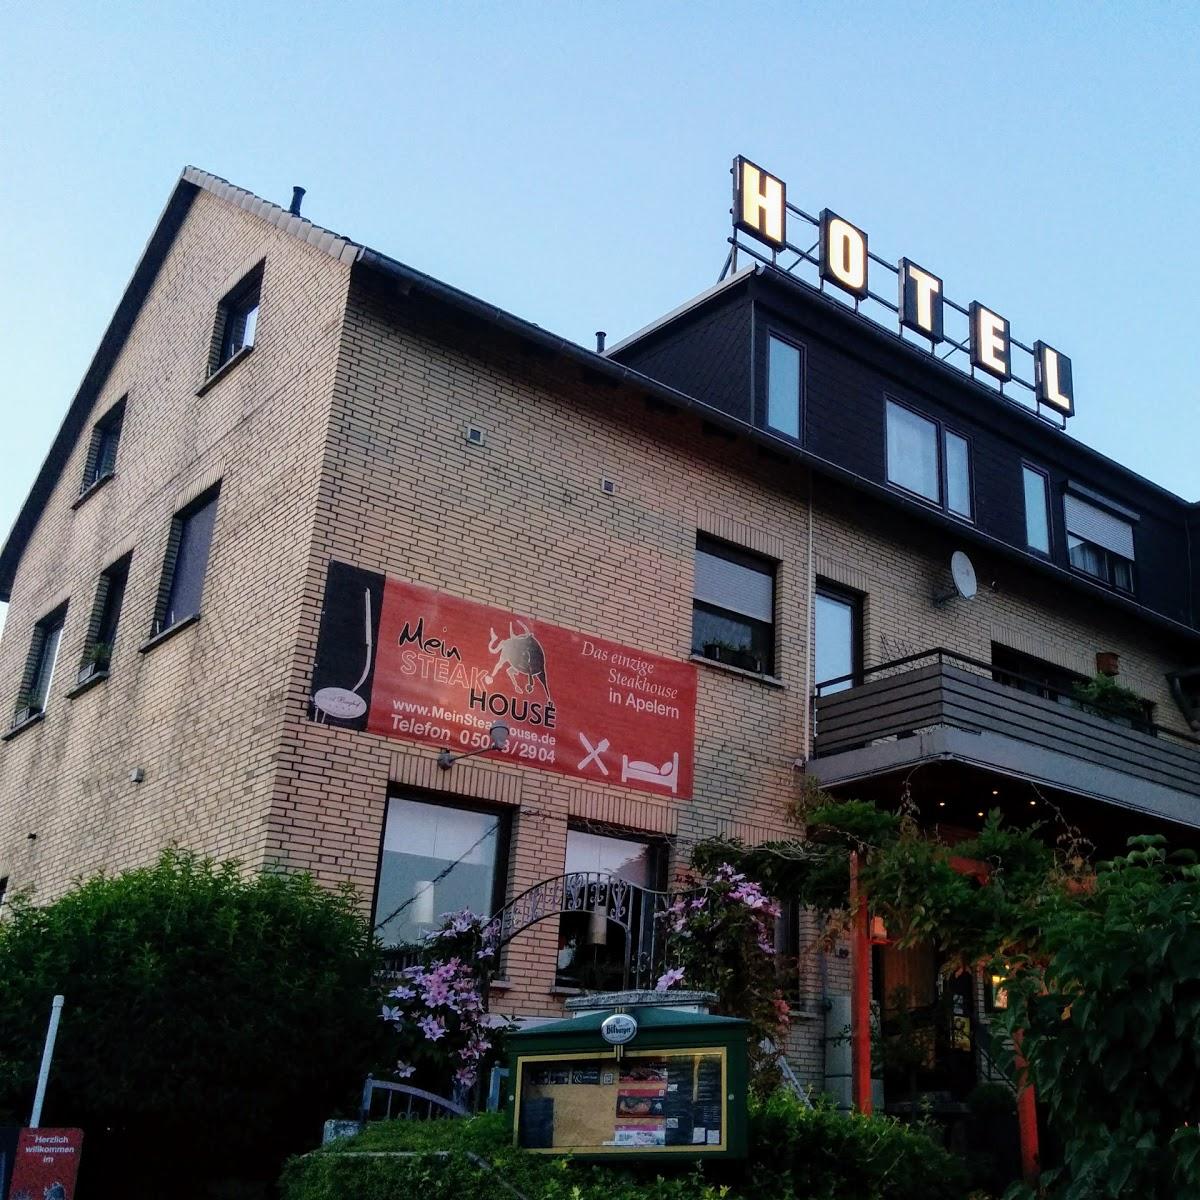 Restaurant "Mein Berghof - Hotel & Steakhouse in" in Apelern